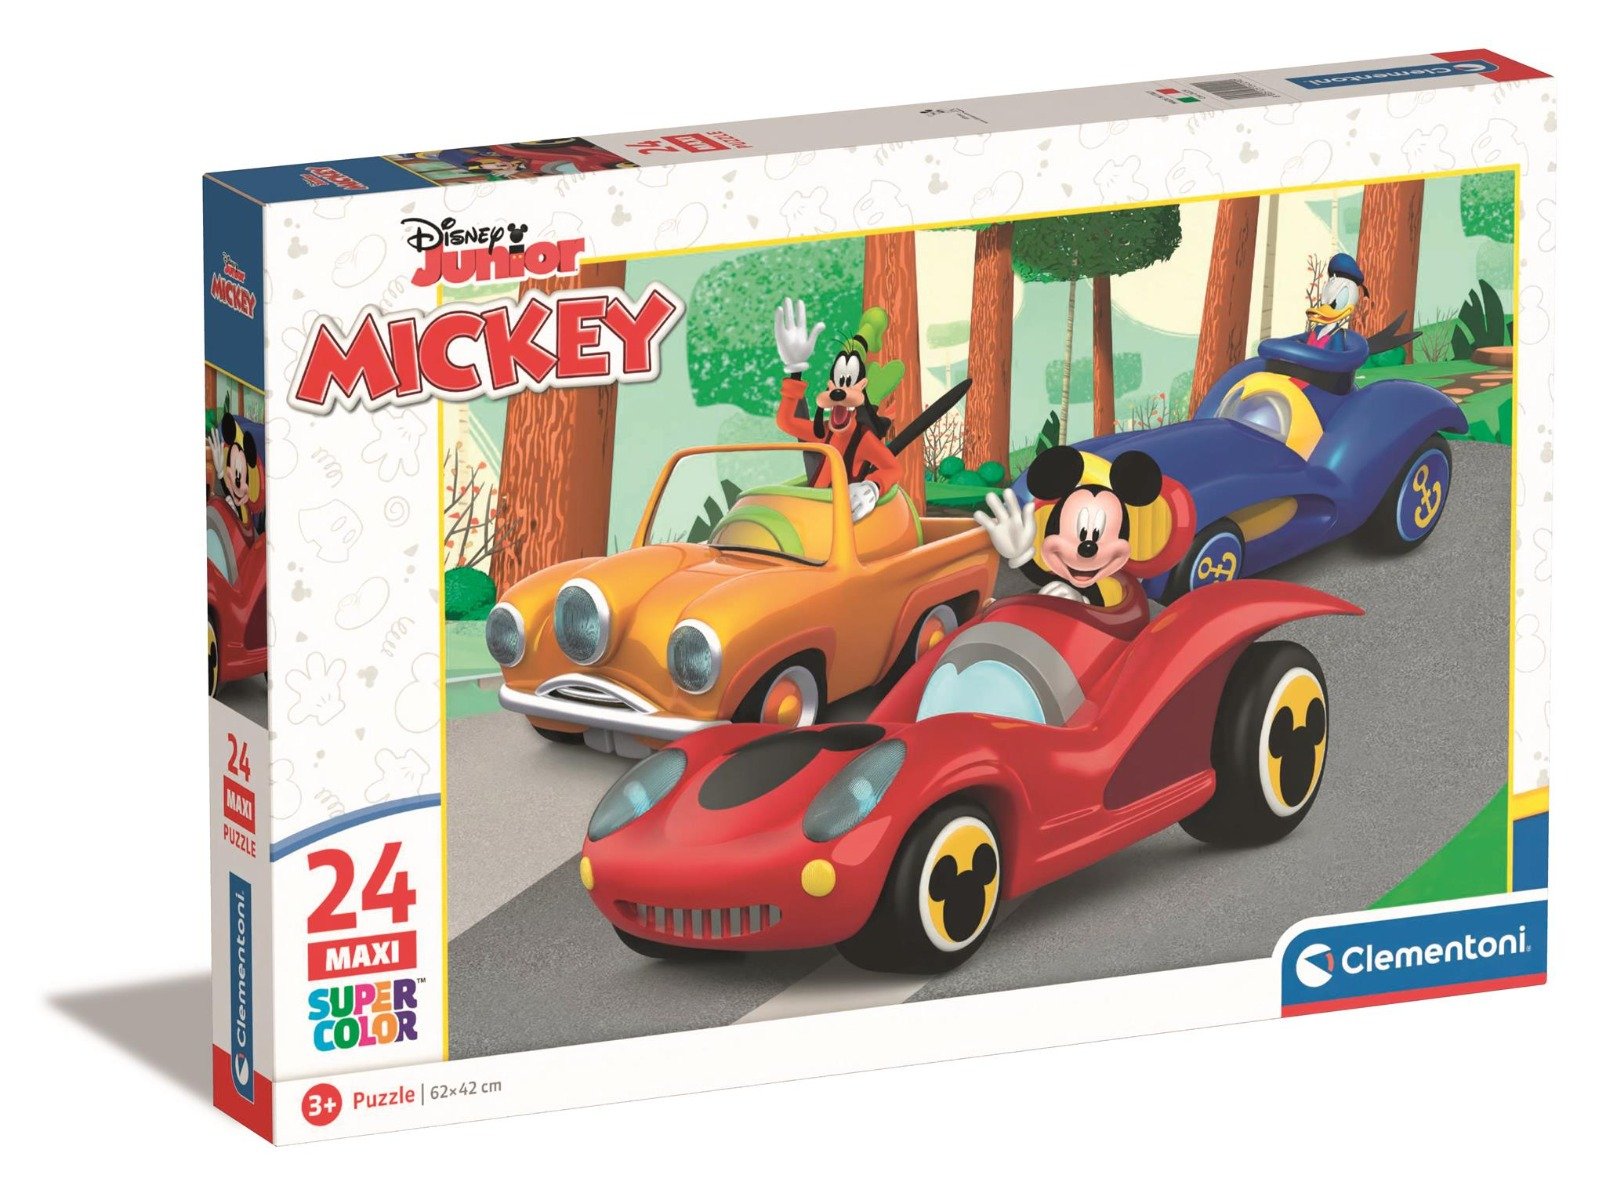 Puzzle Clementoni Maxi, Disney Mickey Mouse, 24 piese Clementoni imagine 2022 protejamcopilaria.ro